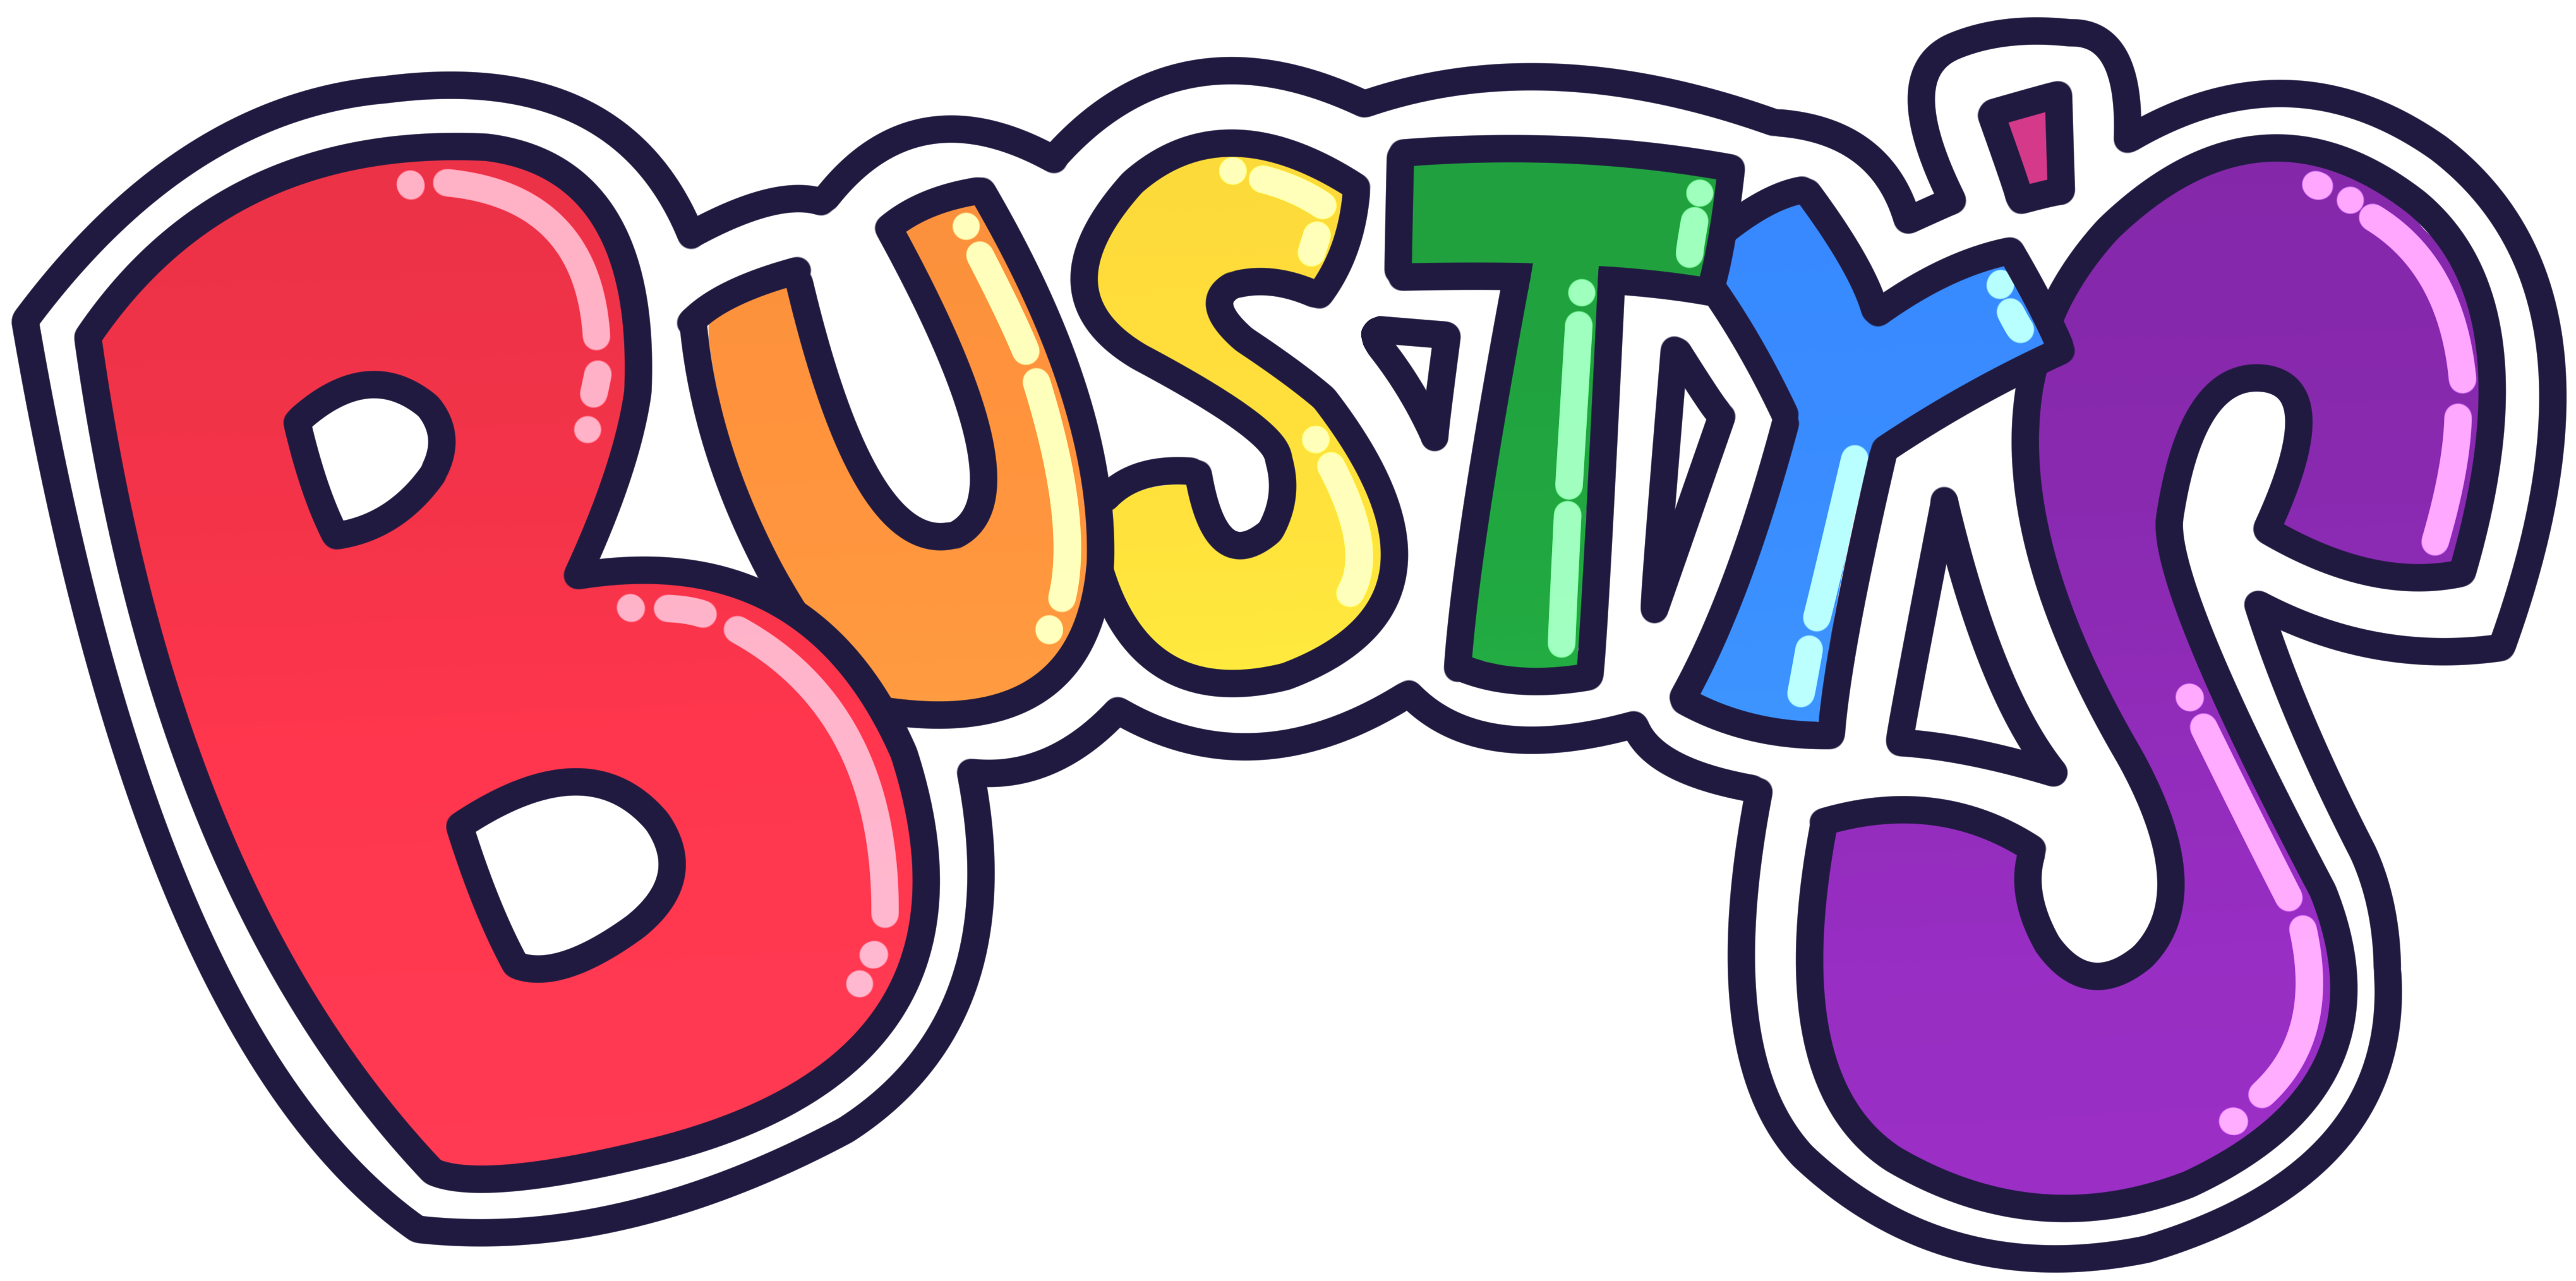 Busty's logo